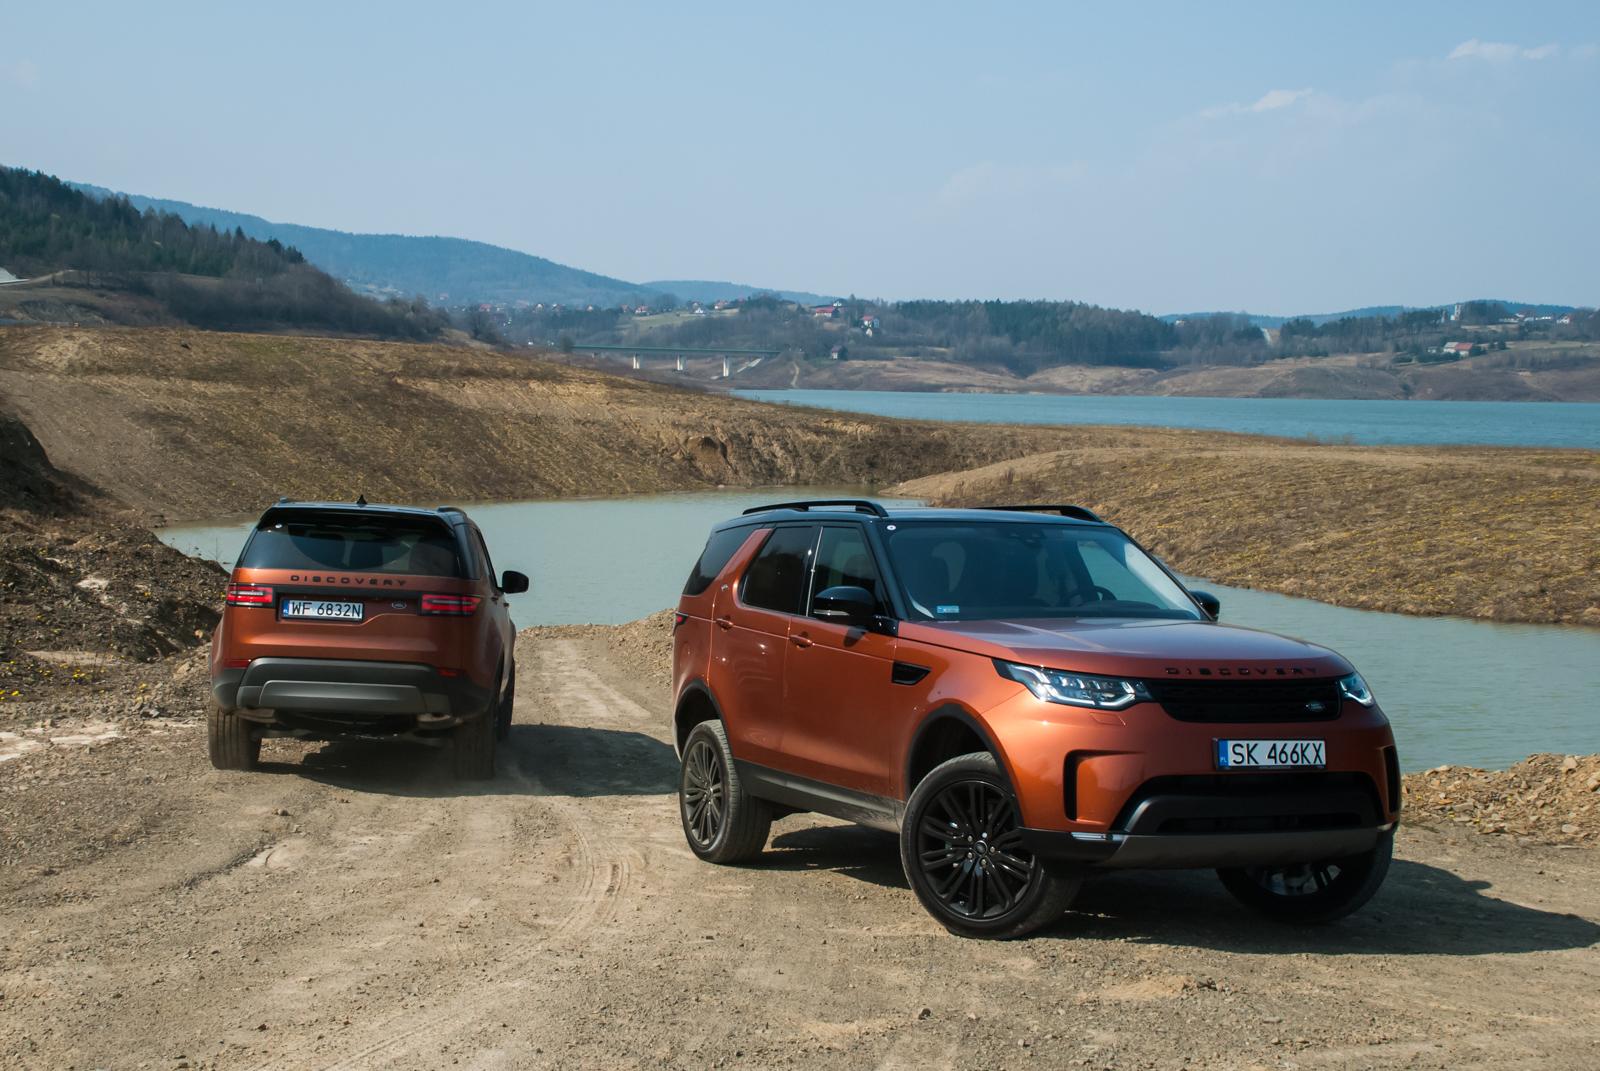 Land Rover Discovery piąte wcielenie legendy